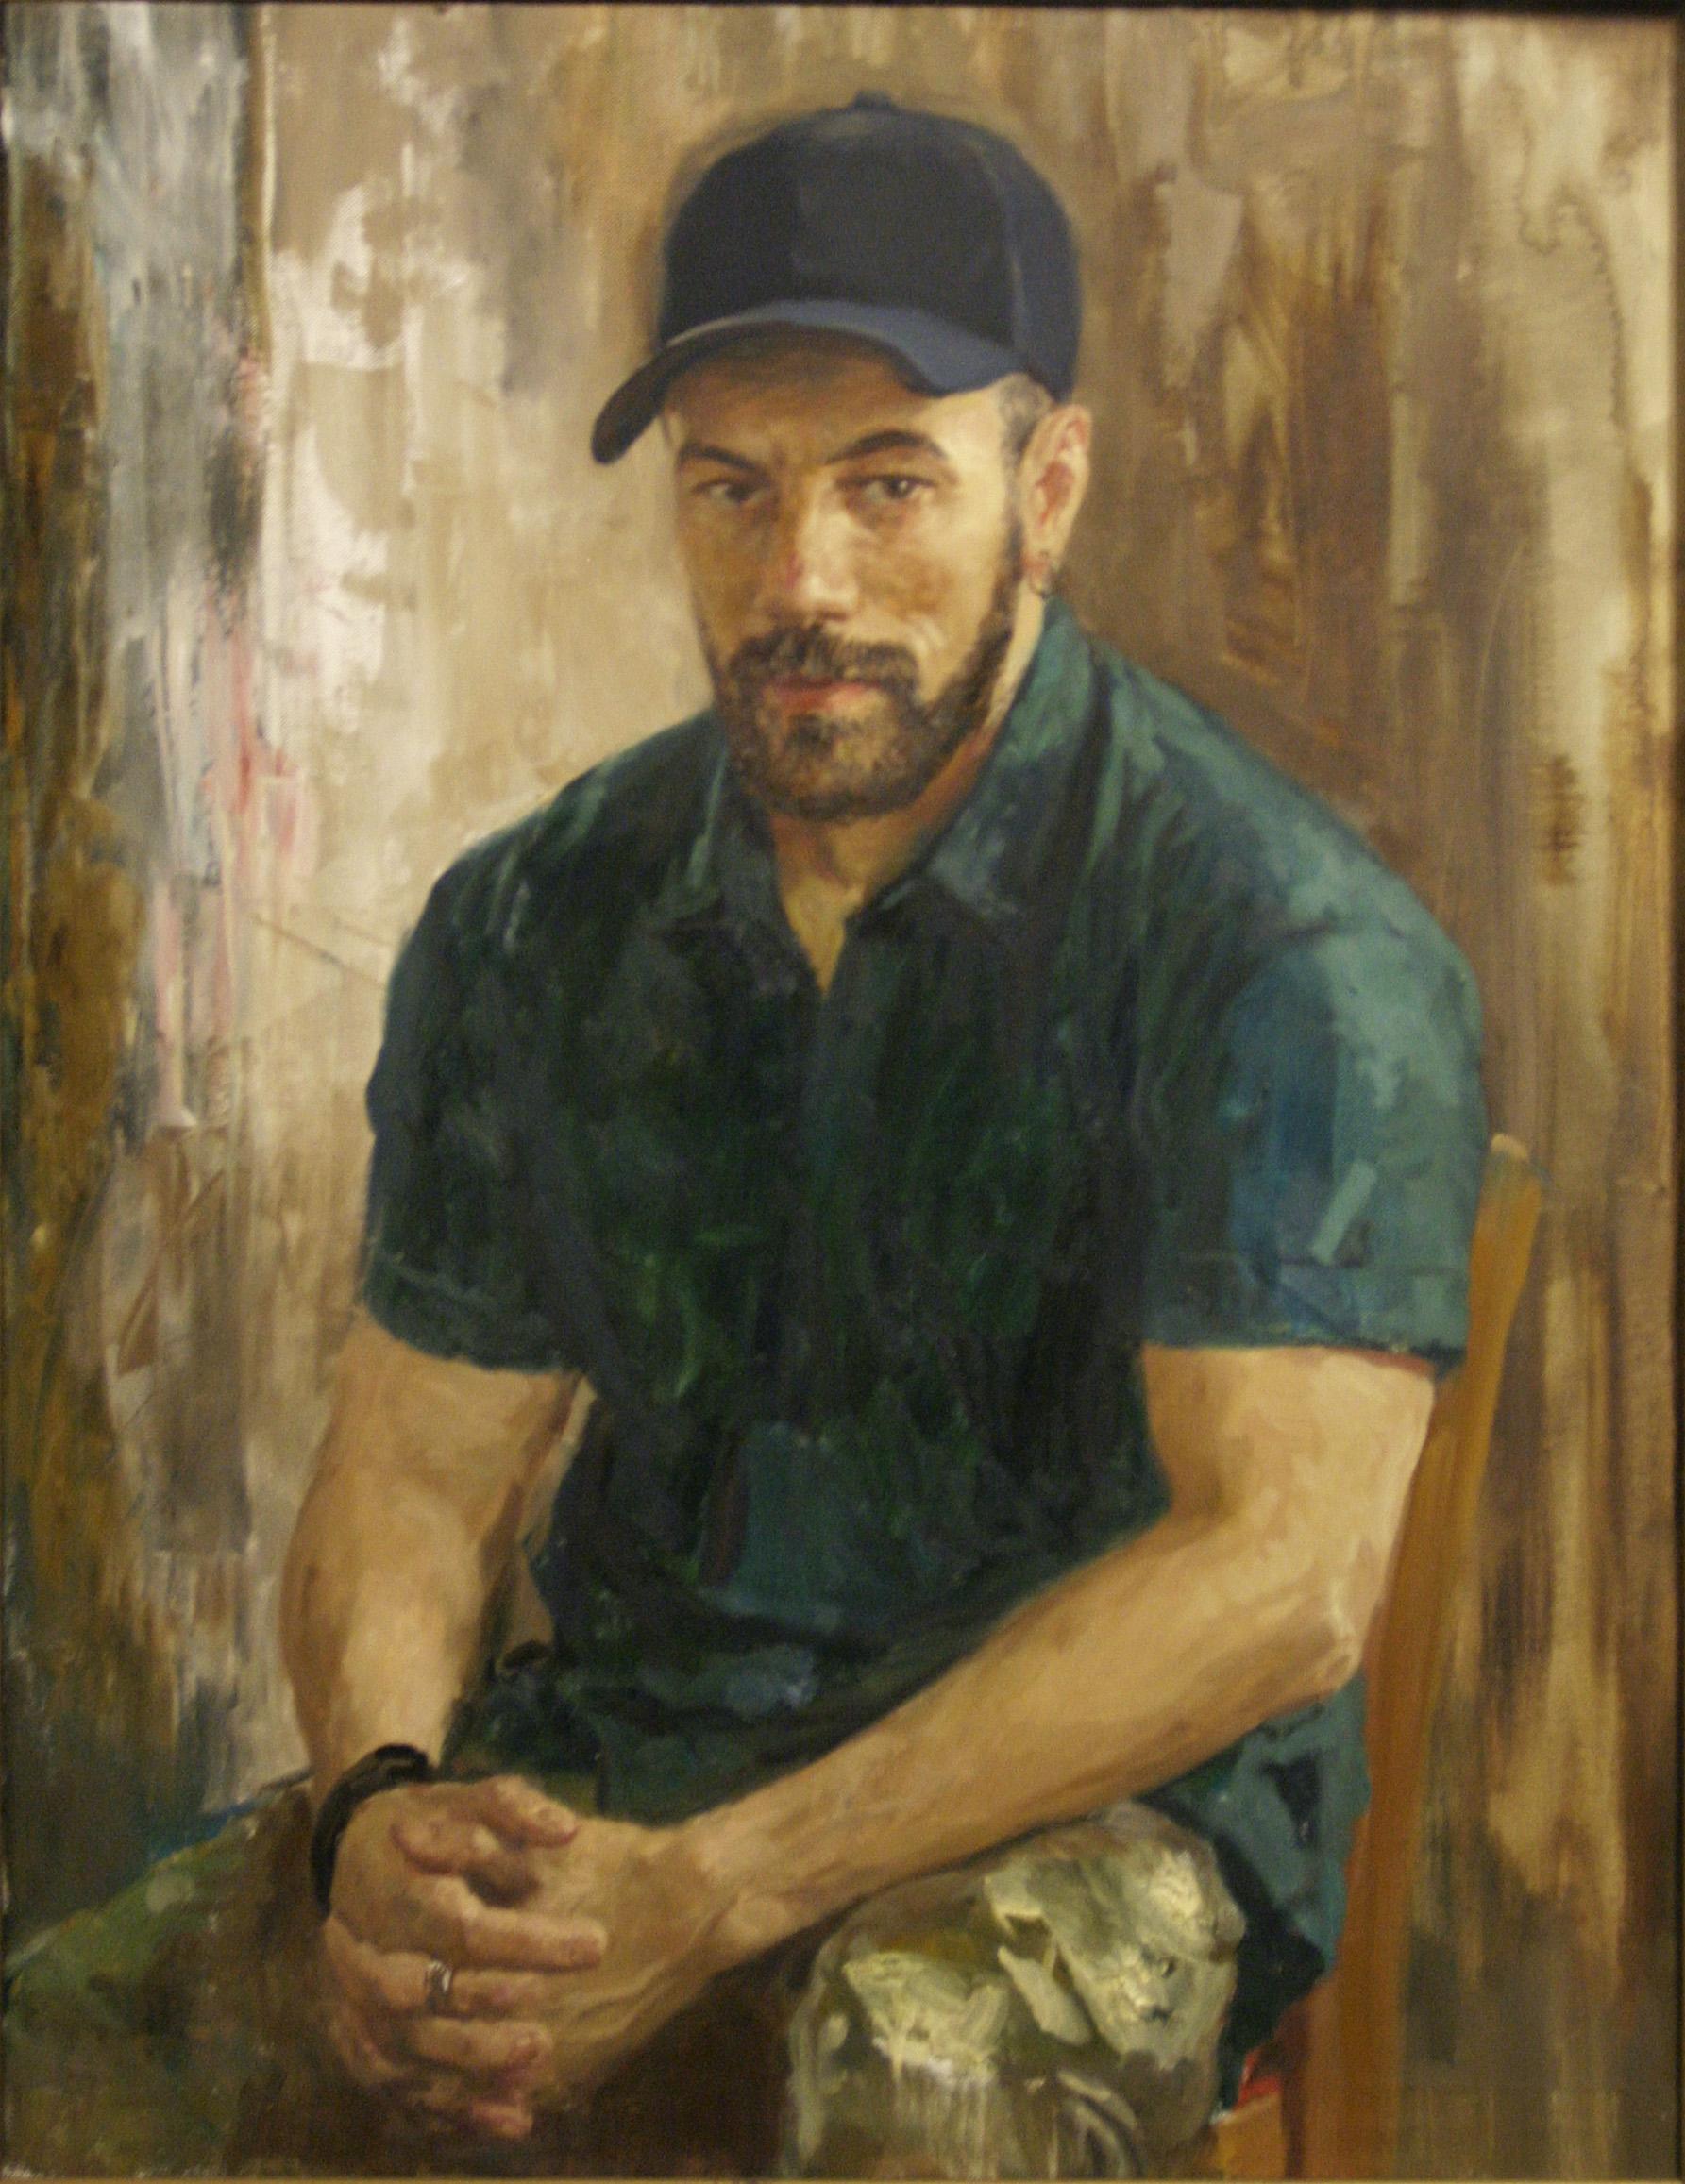 Guy in the baseball cap. Original modern art painting